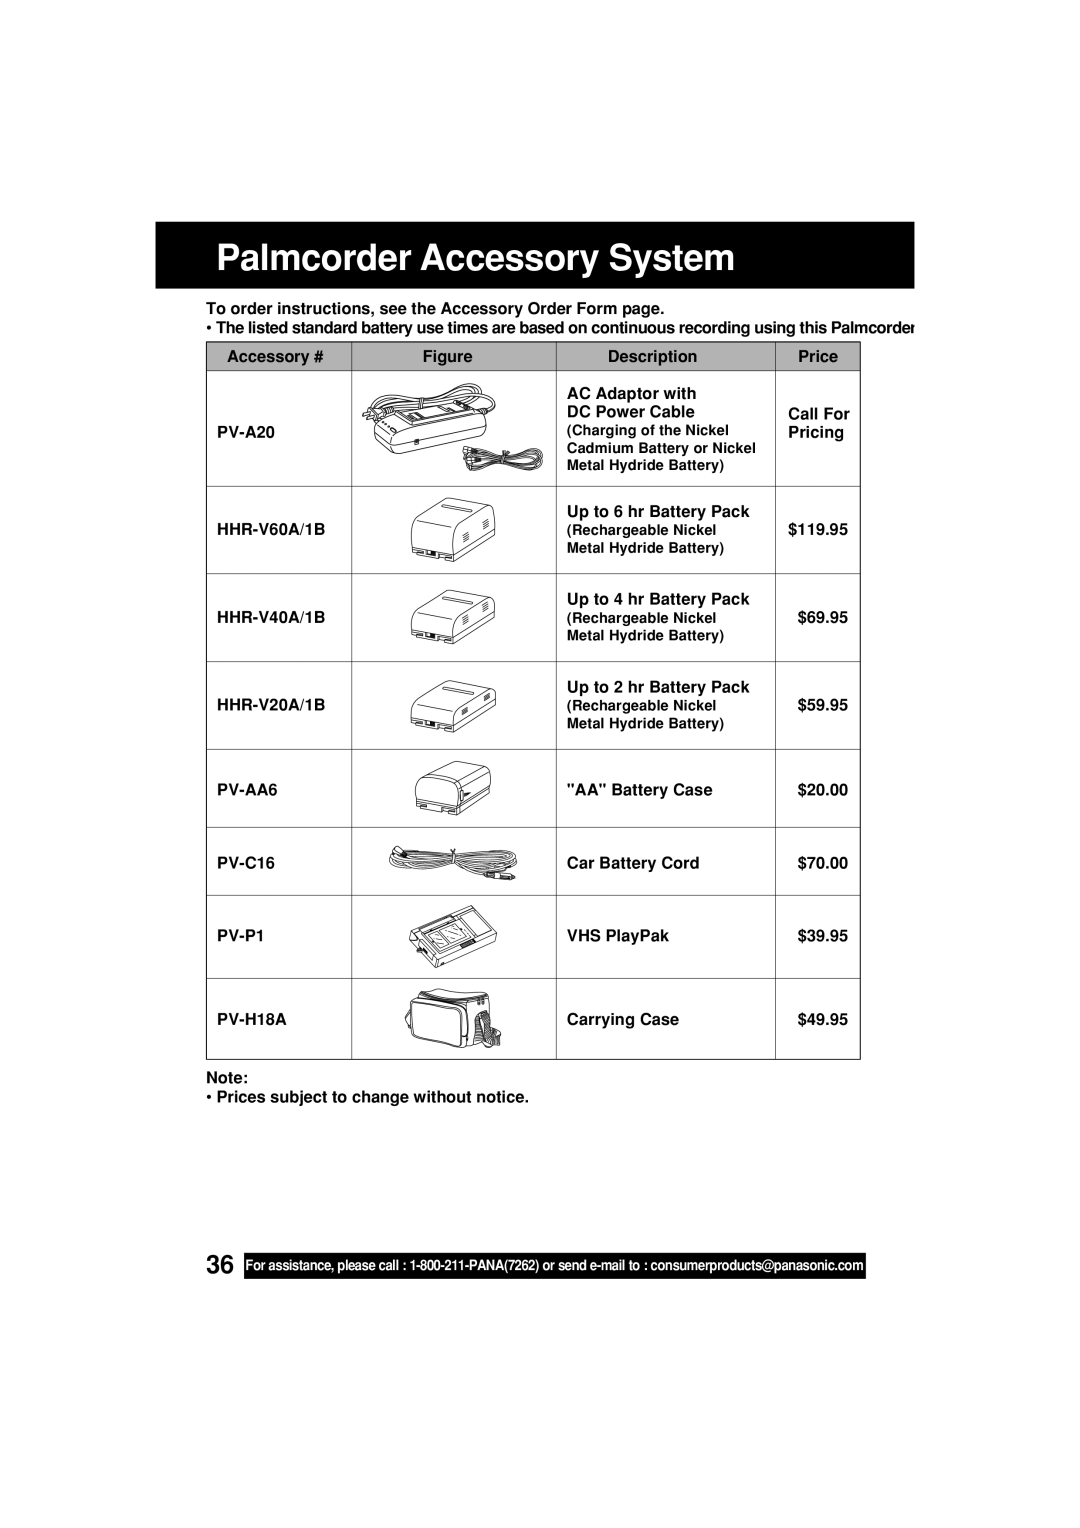 Panasonic VM-L153 operating instructions Palmcorder Accessory System, PV-AA6 